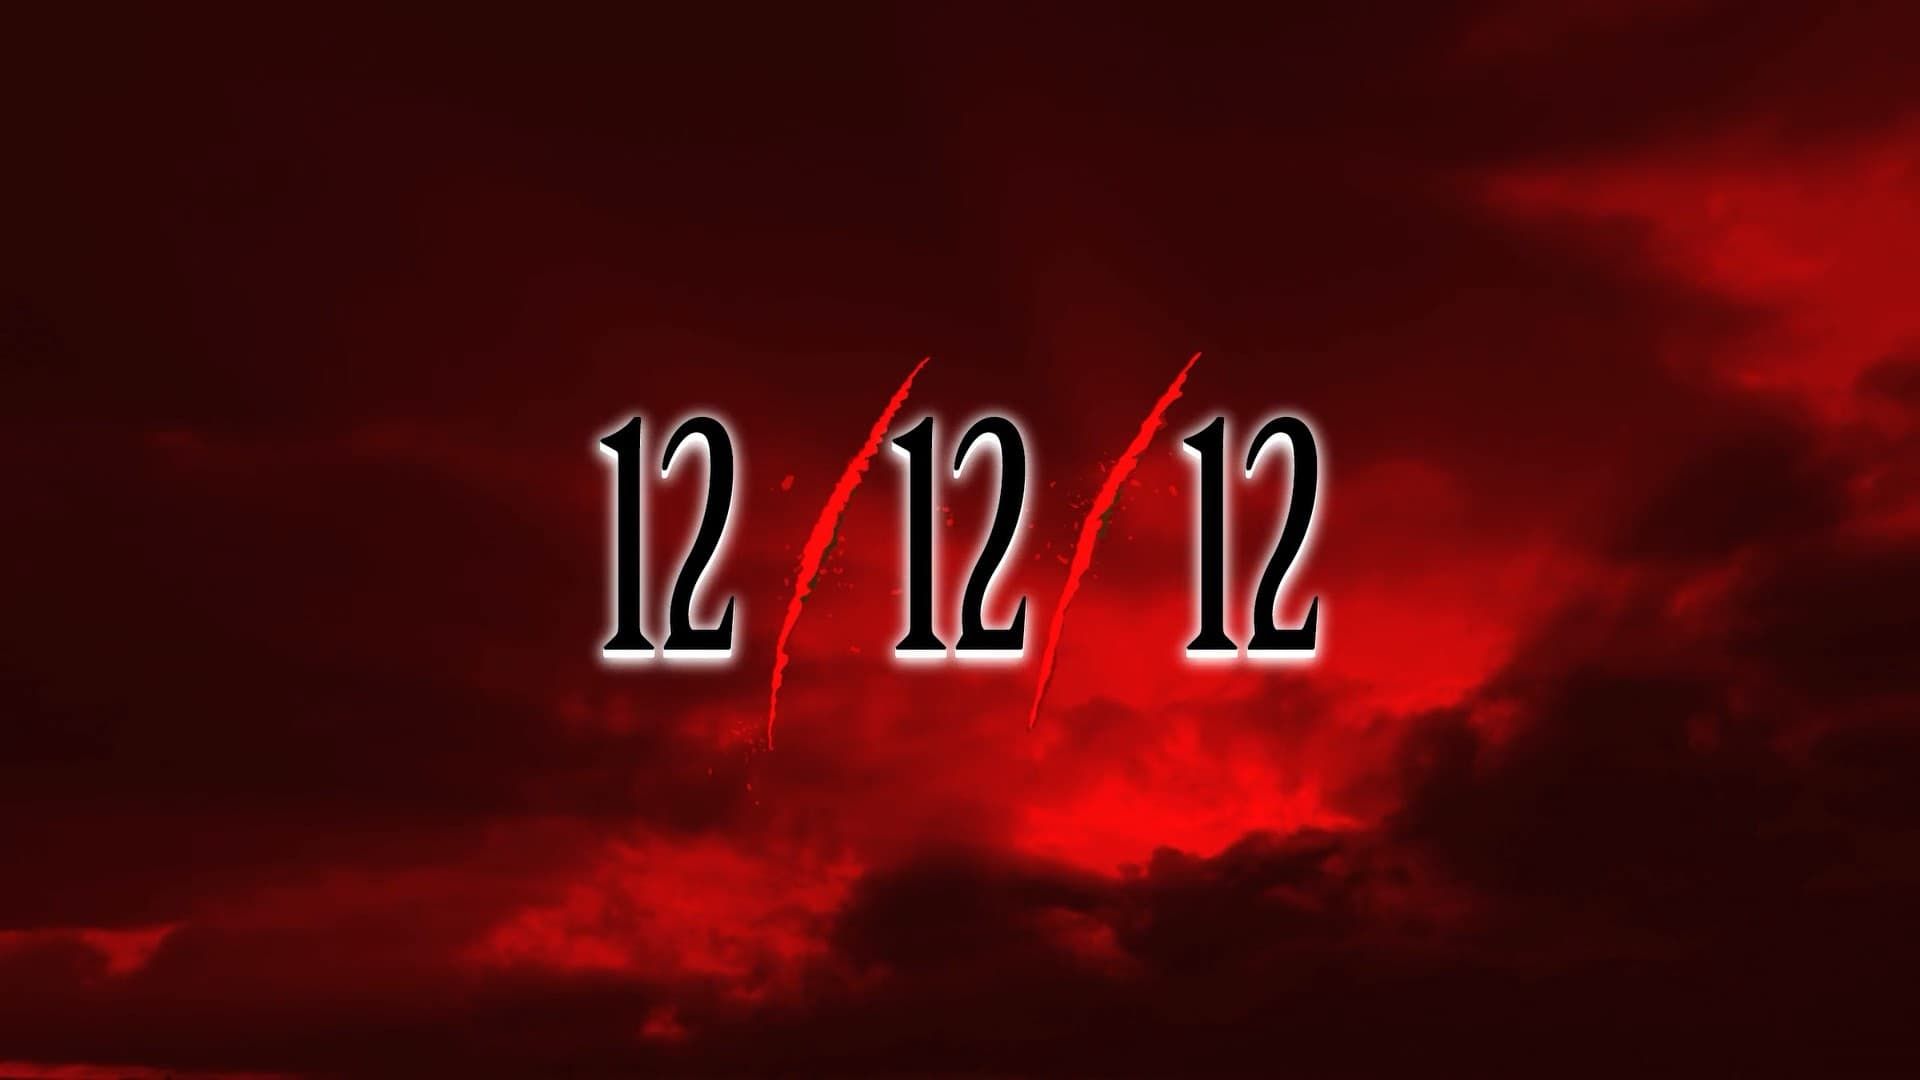 12/12/12 background